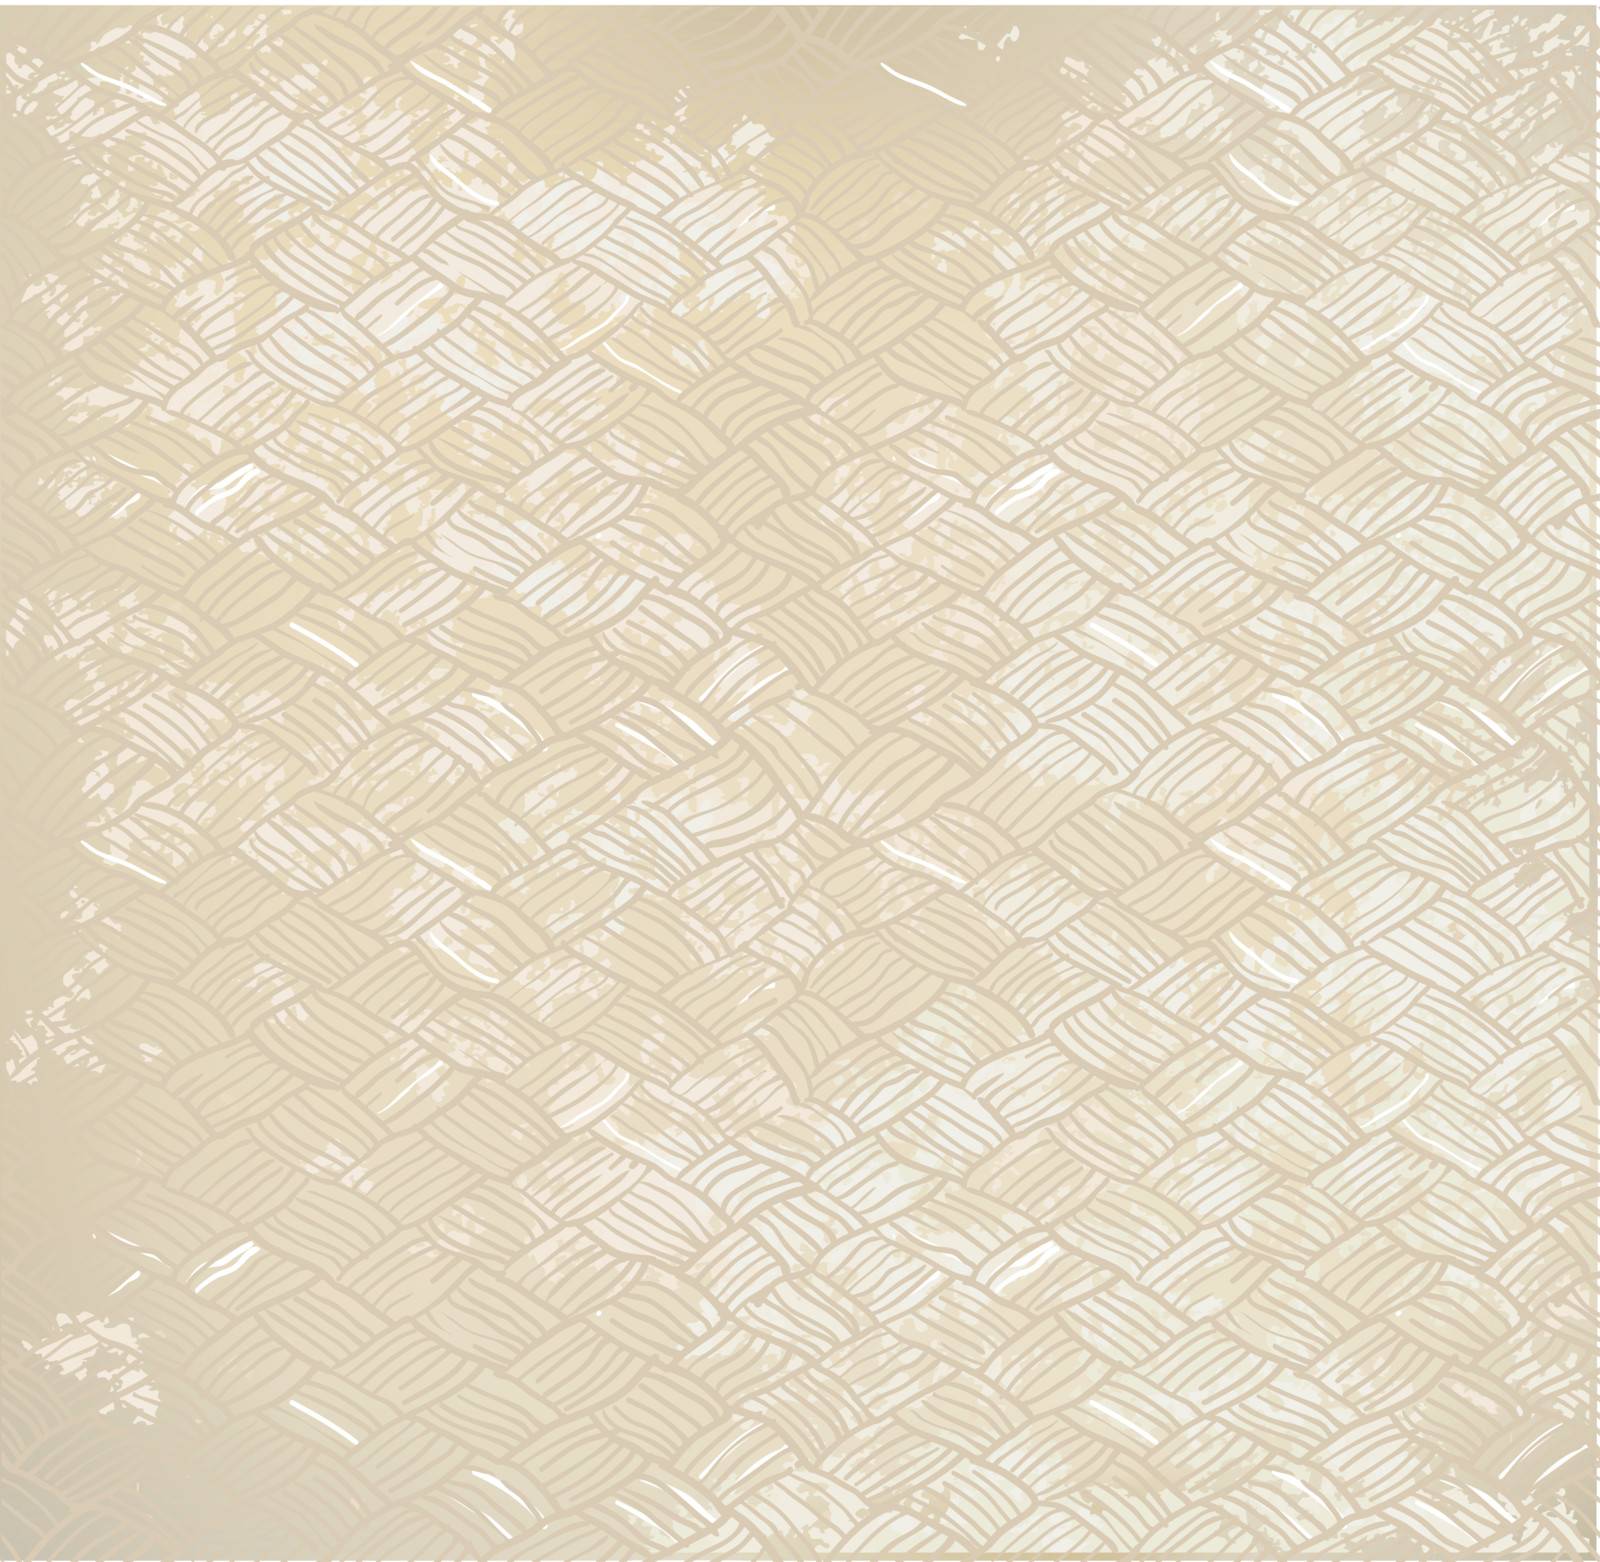 Netting vector background in pastel tones by Lemuana